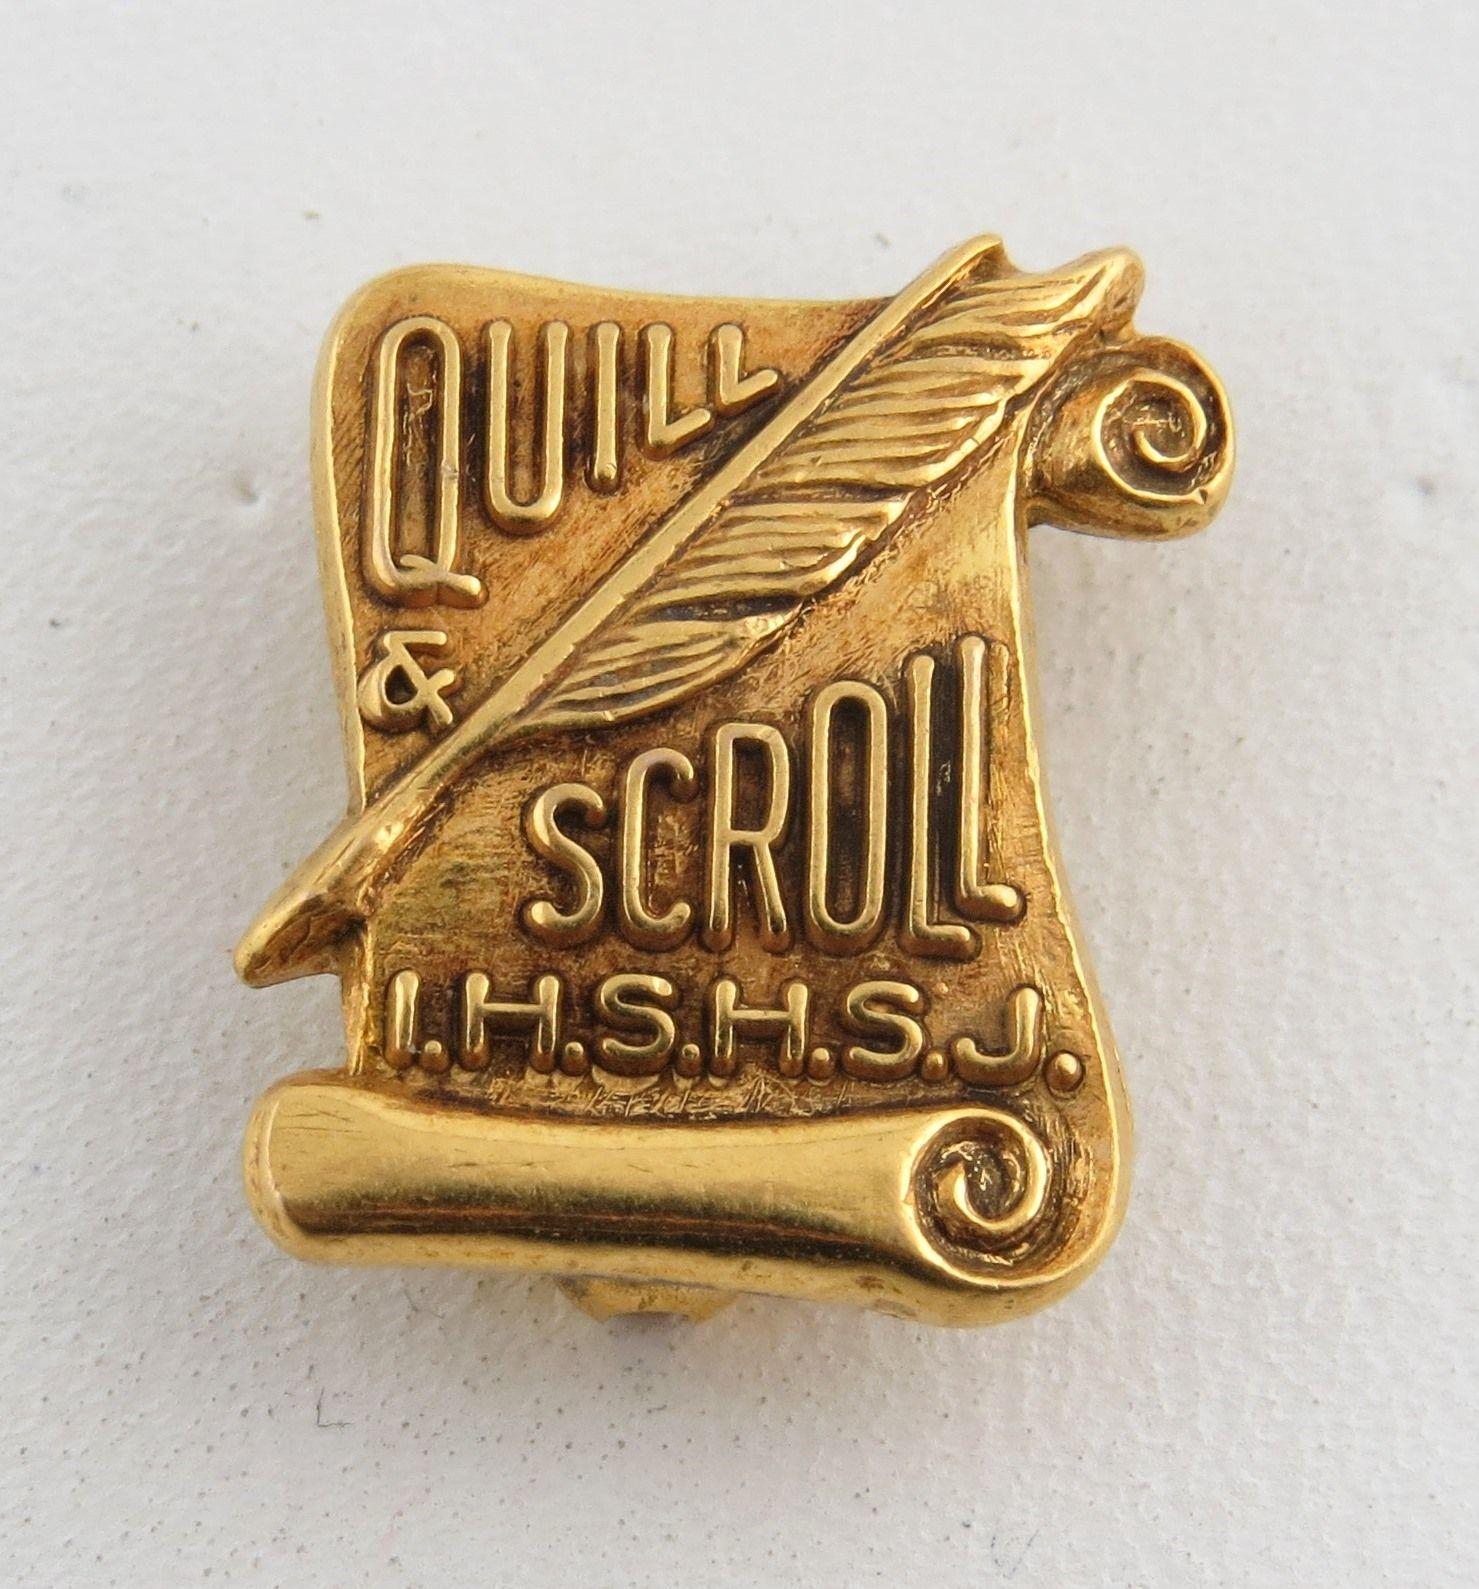 Quill Scroll Logo - Quill & Scroll IHSHSJ Pin School Honor Society Member